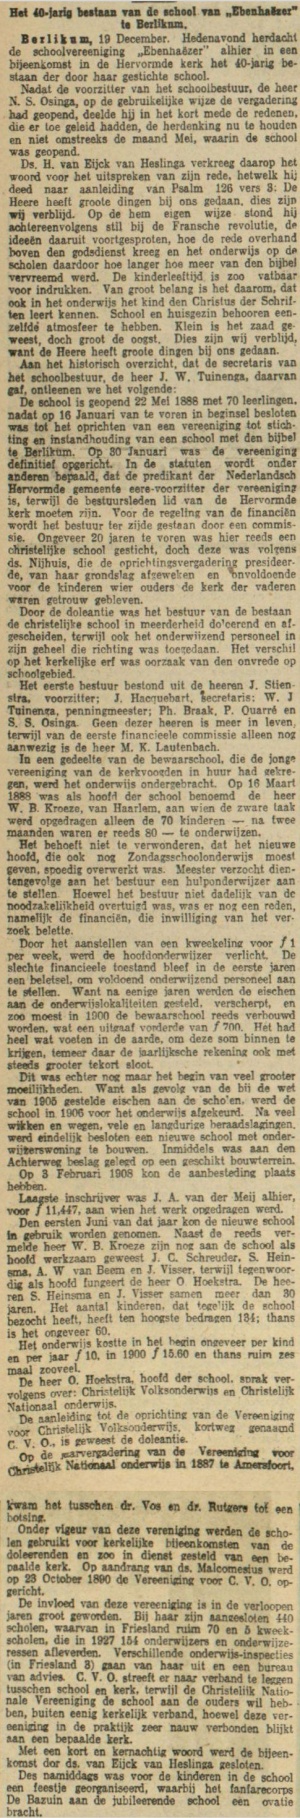 Leeuwarder courant, 20-12-1928